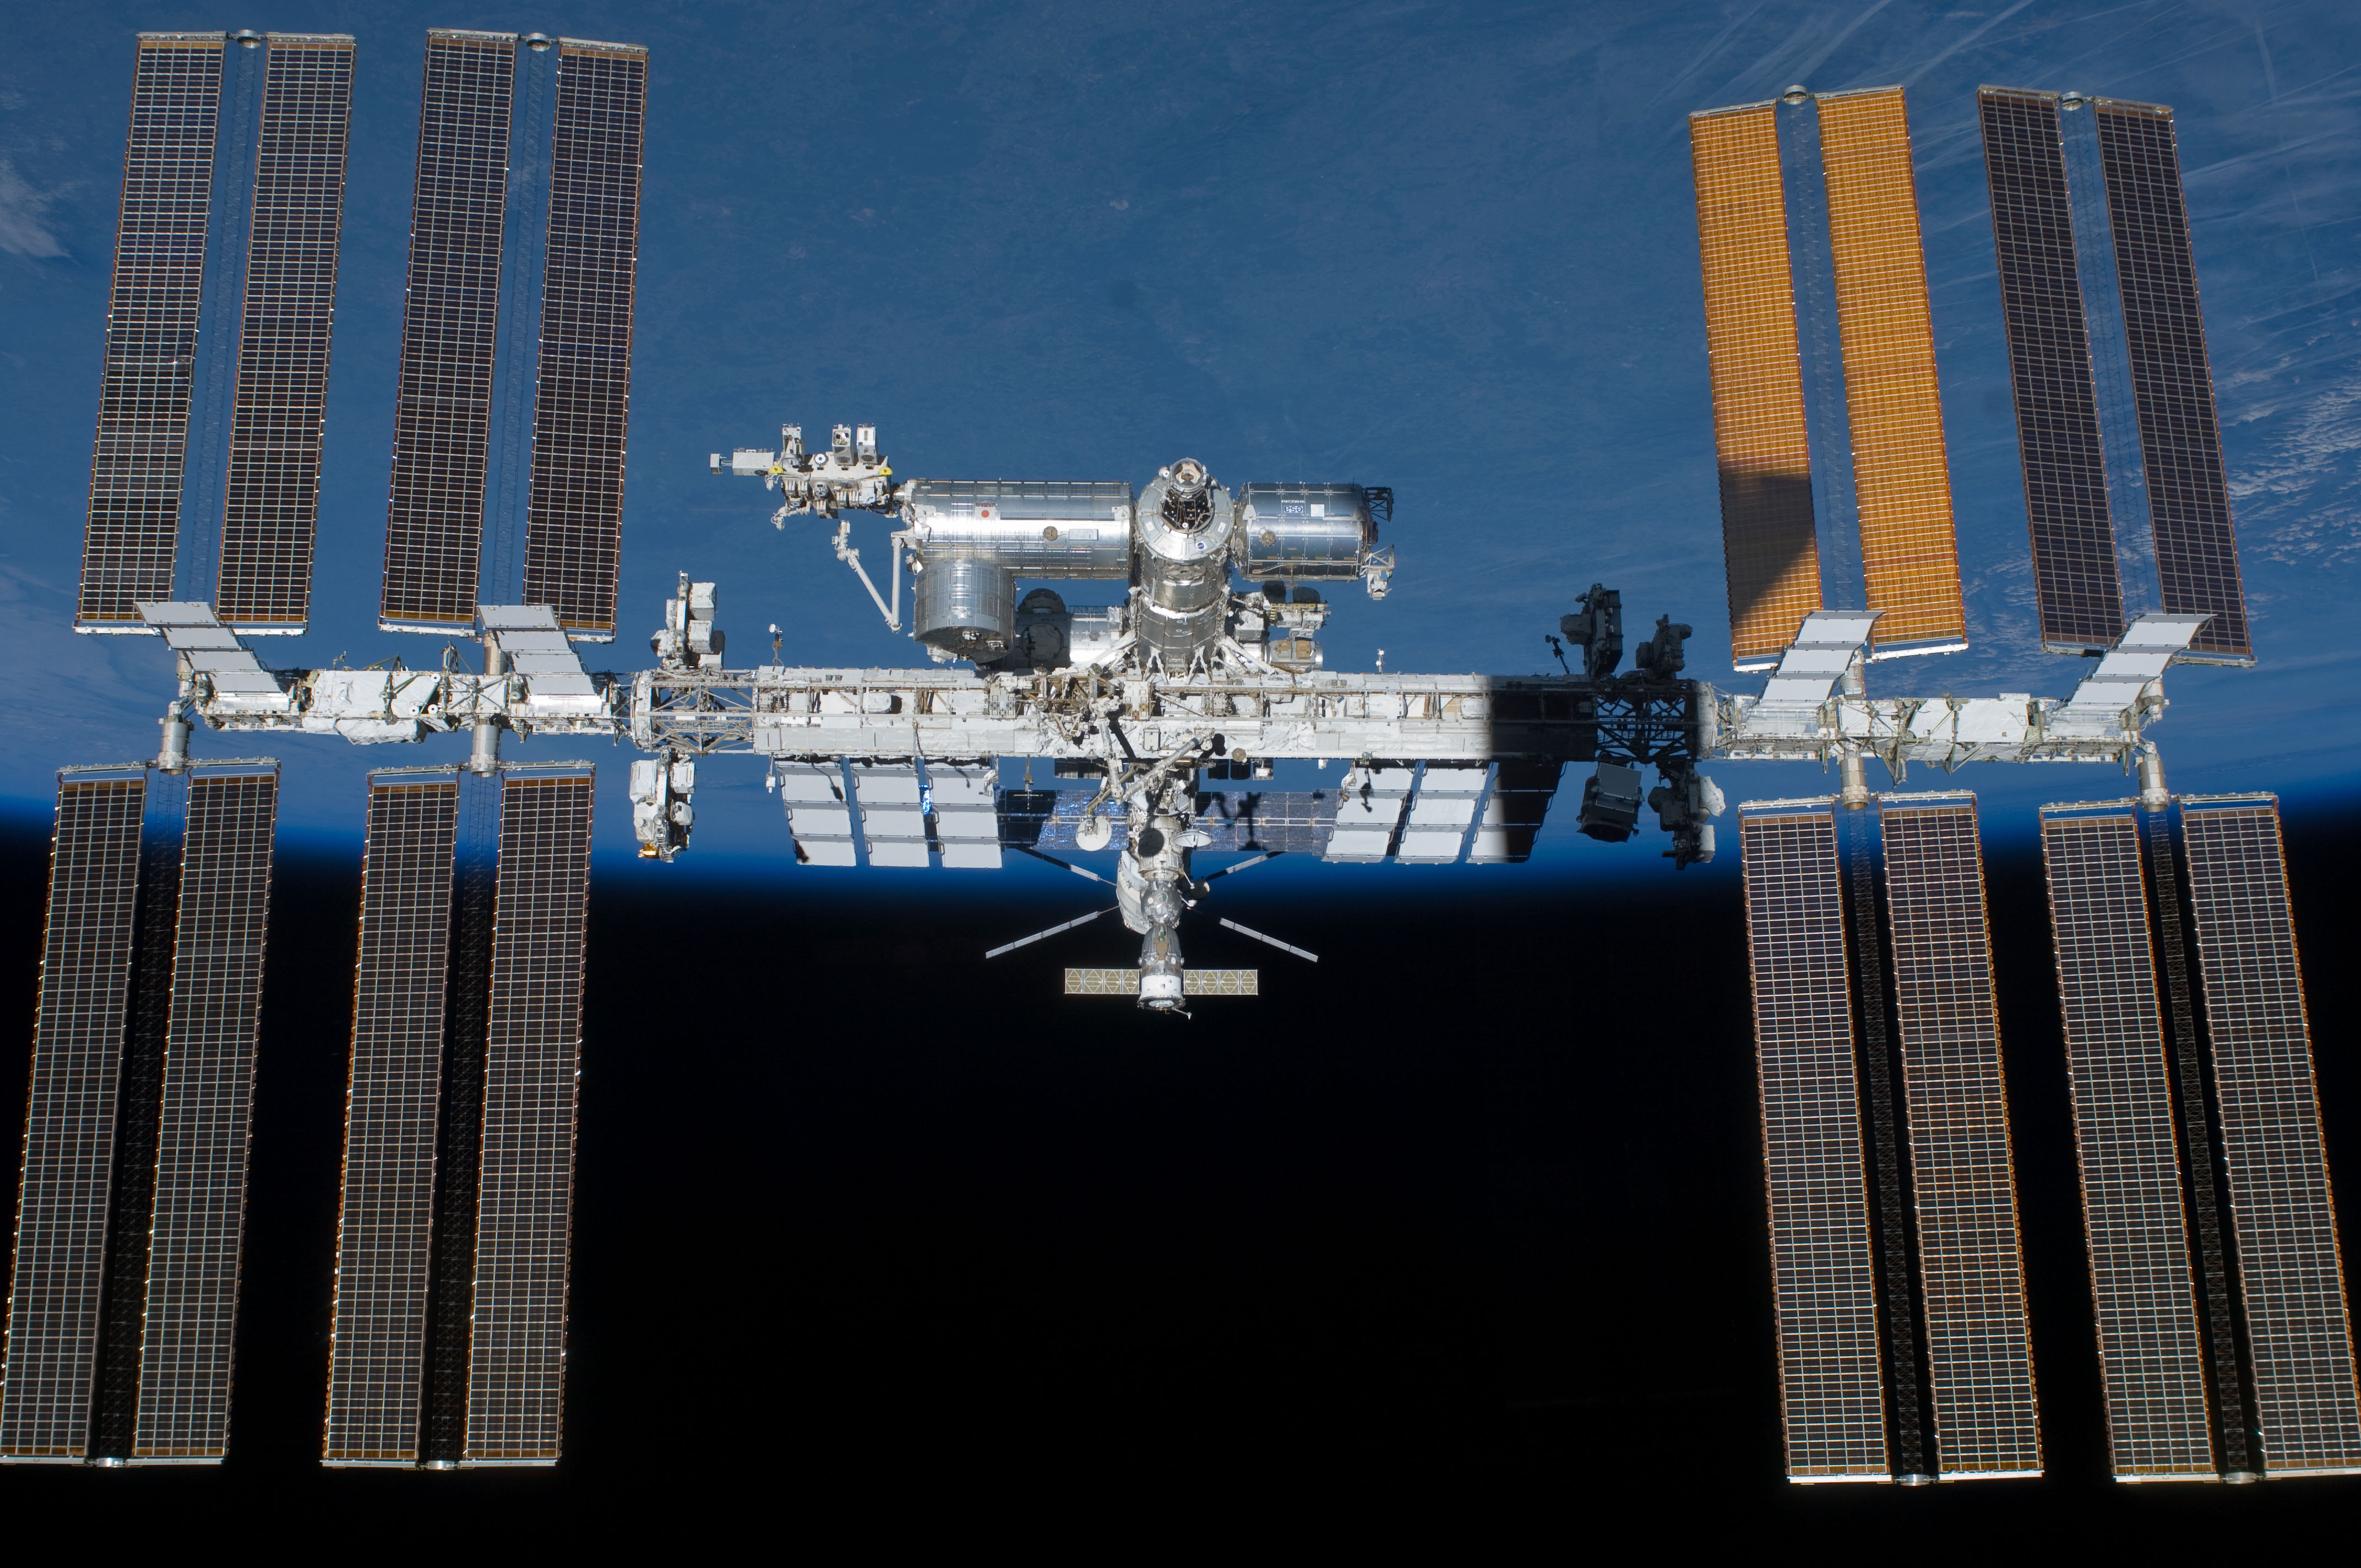 International Space Station | NASA